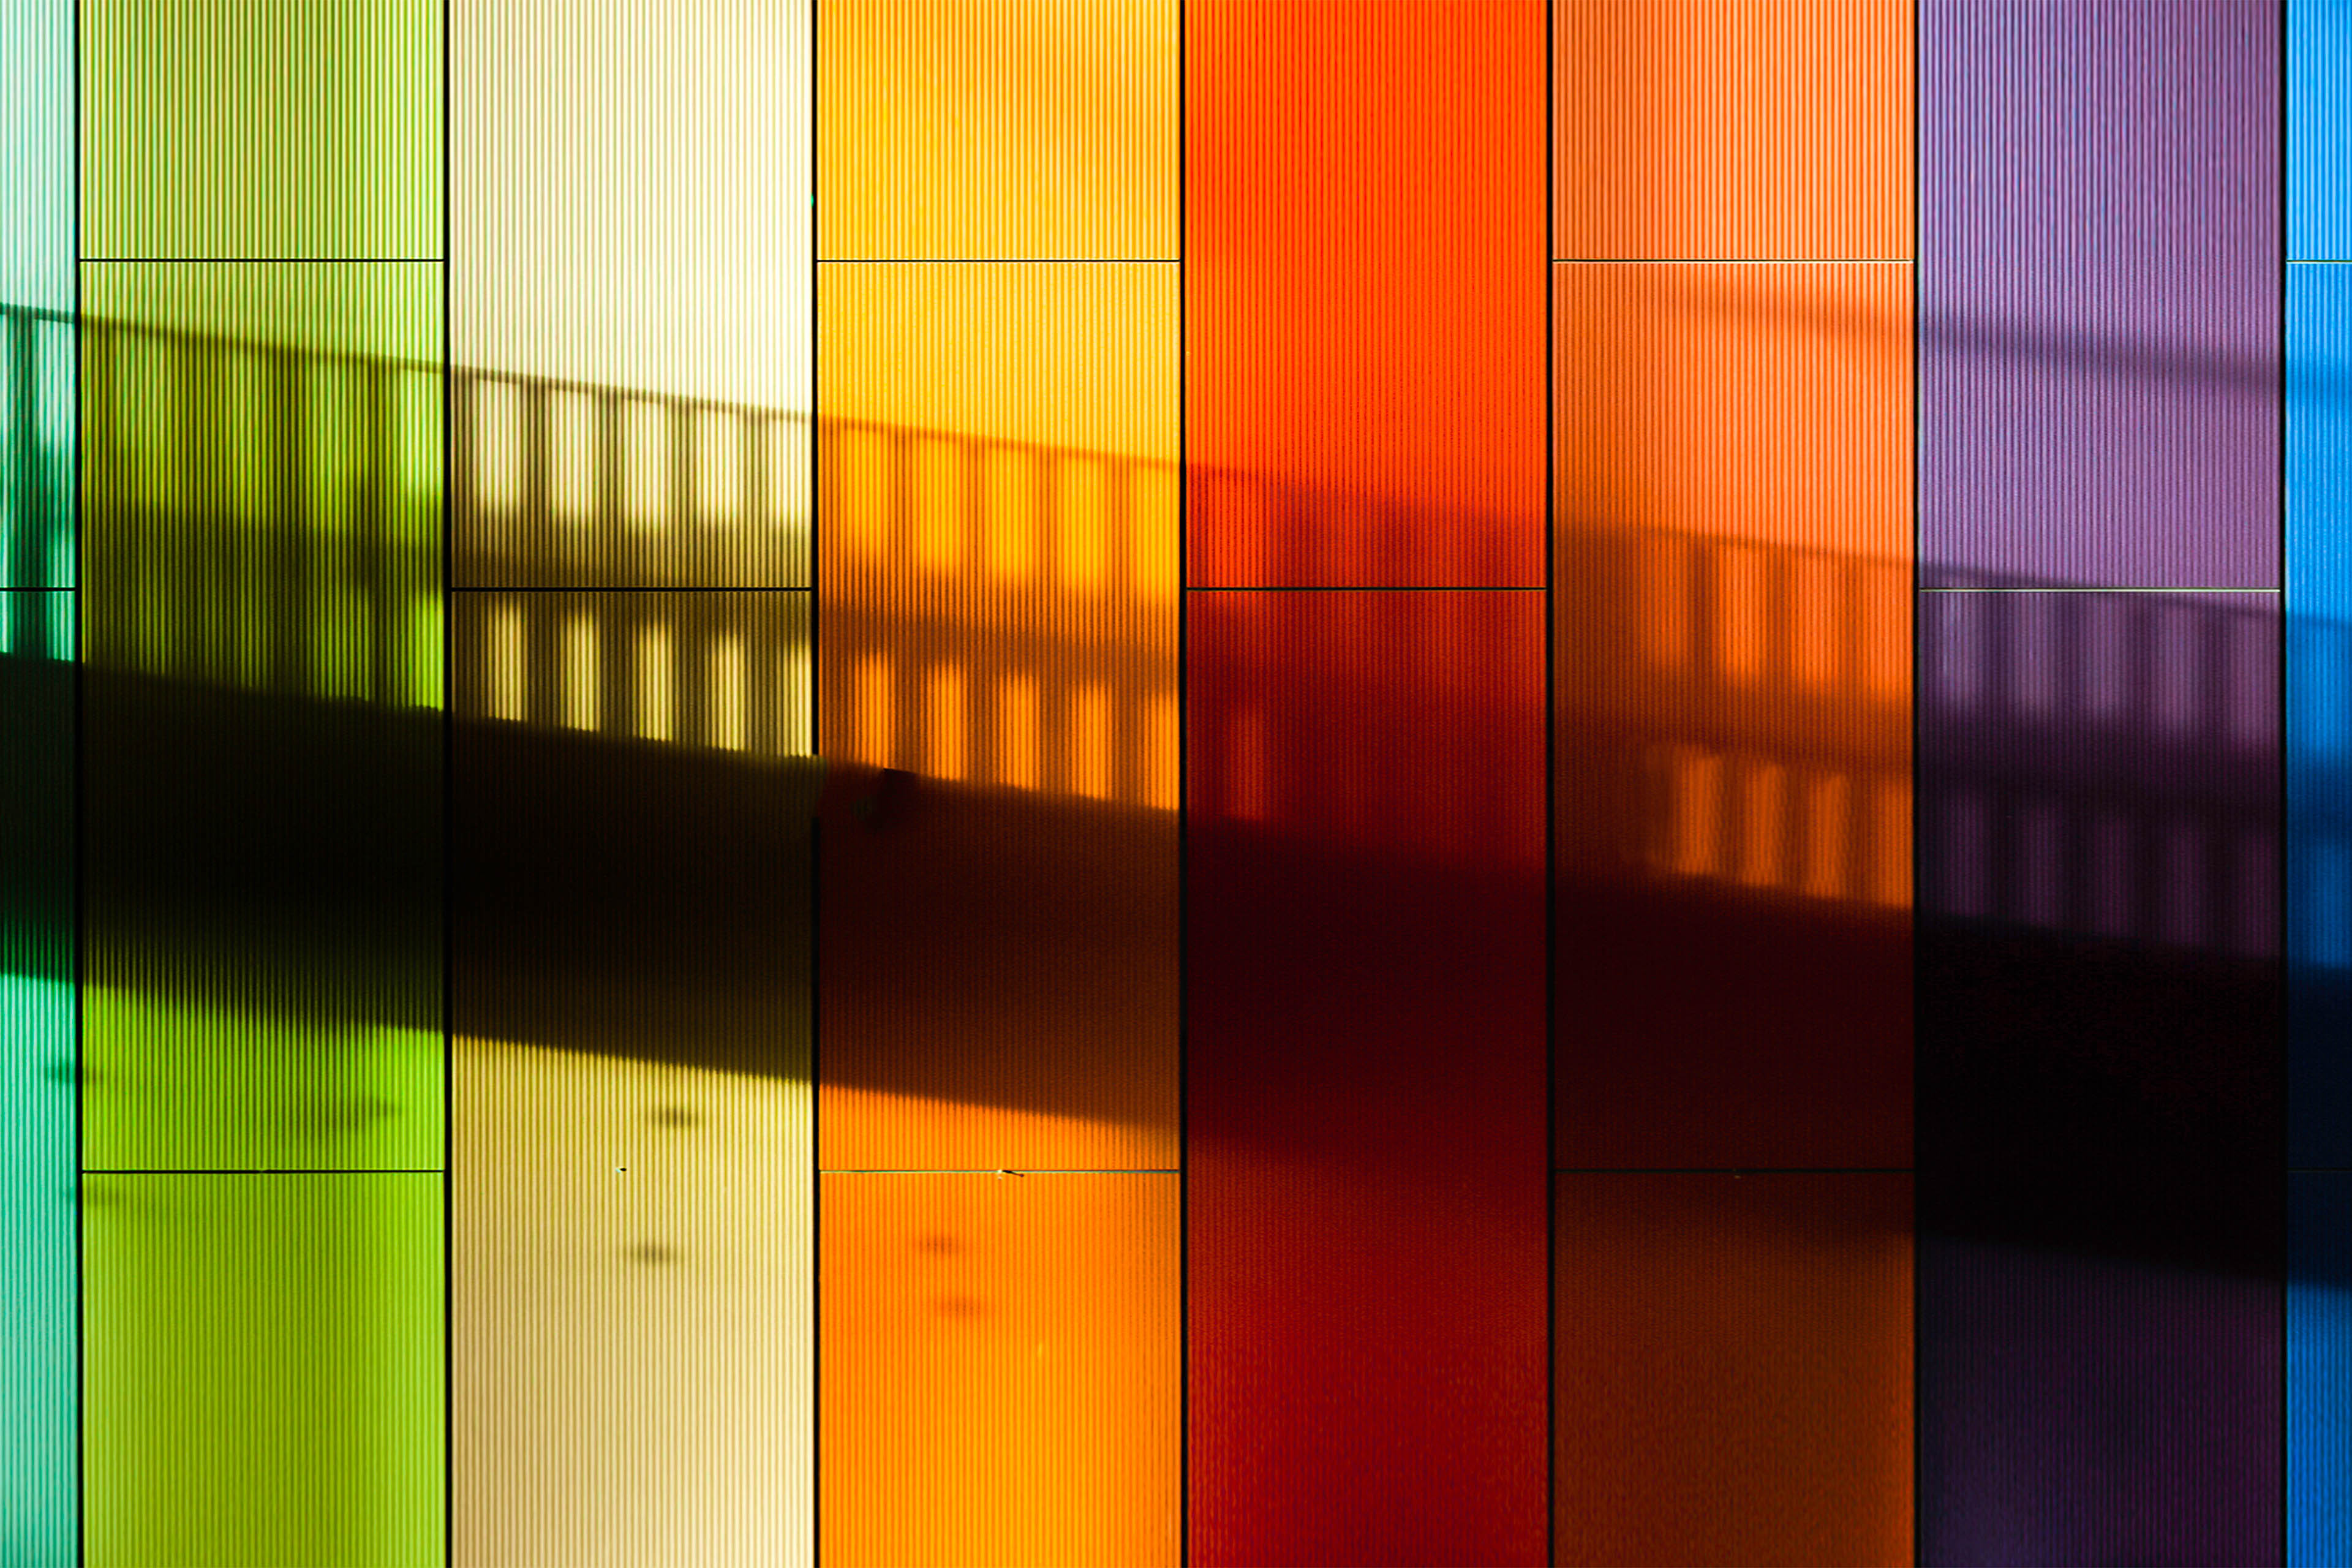 Shadow of a straircase on a rainbow striped wall